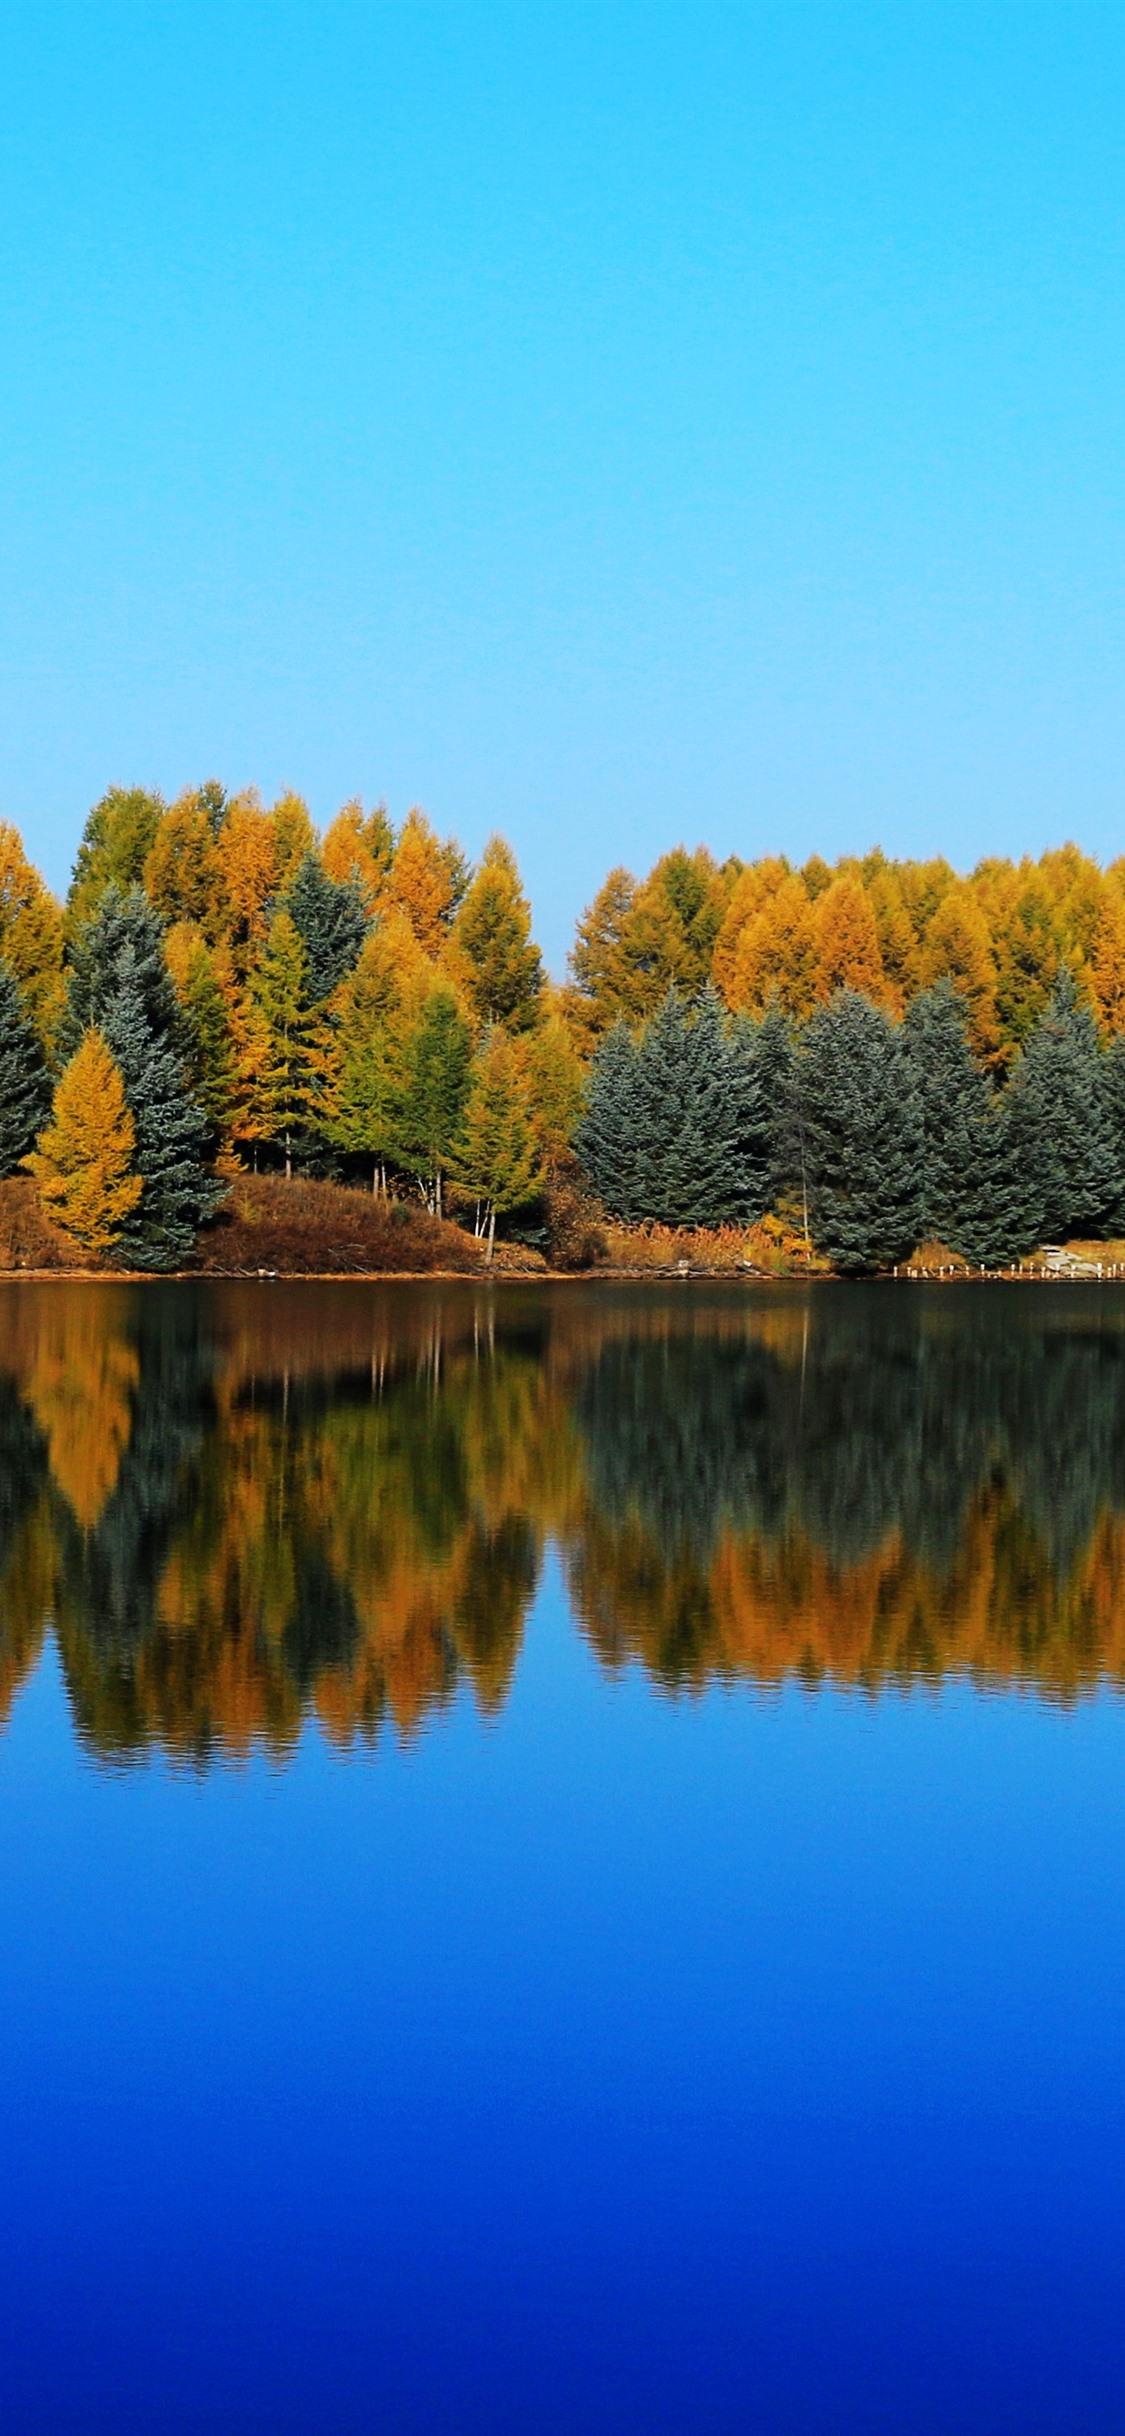 Saihanba, Shenlongtan, trees, lake, water reflection, autumn